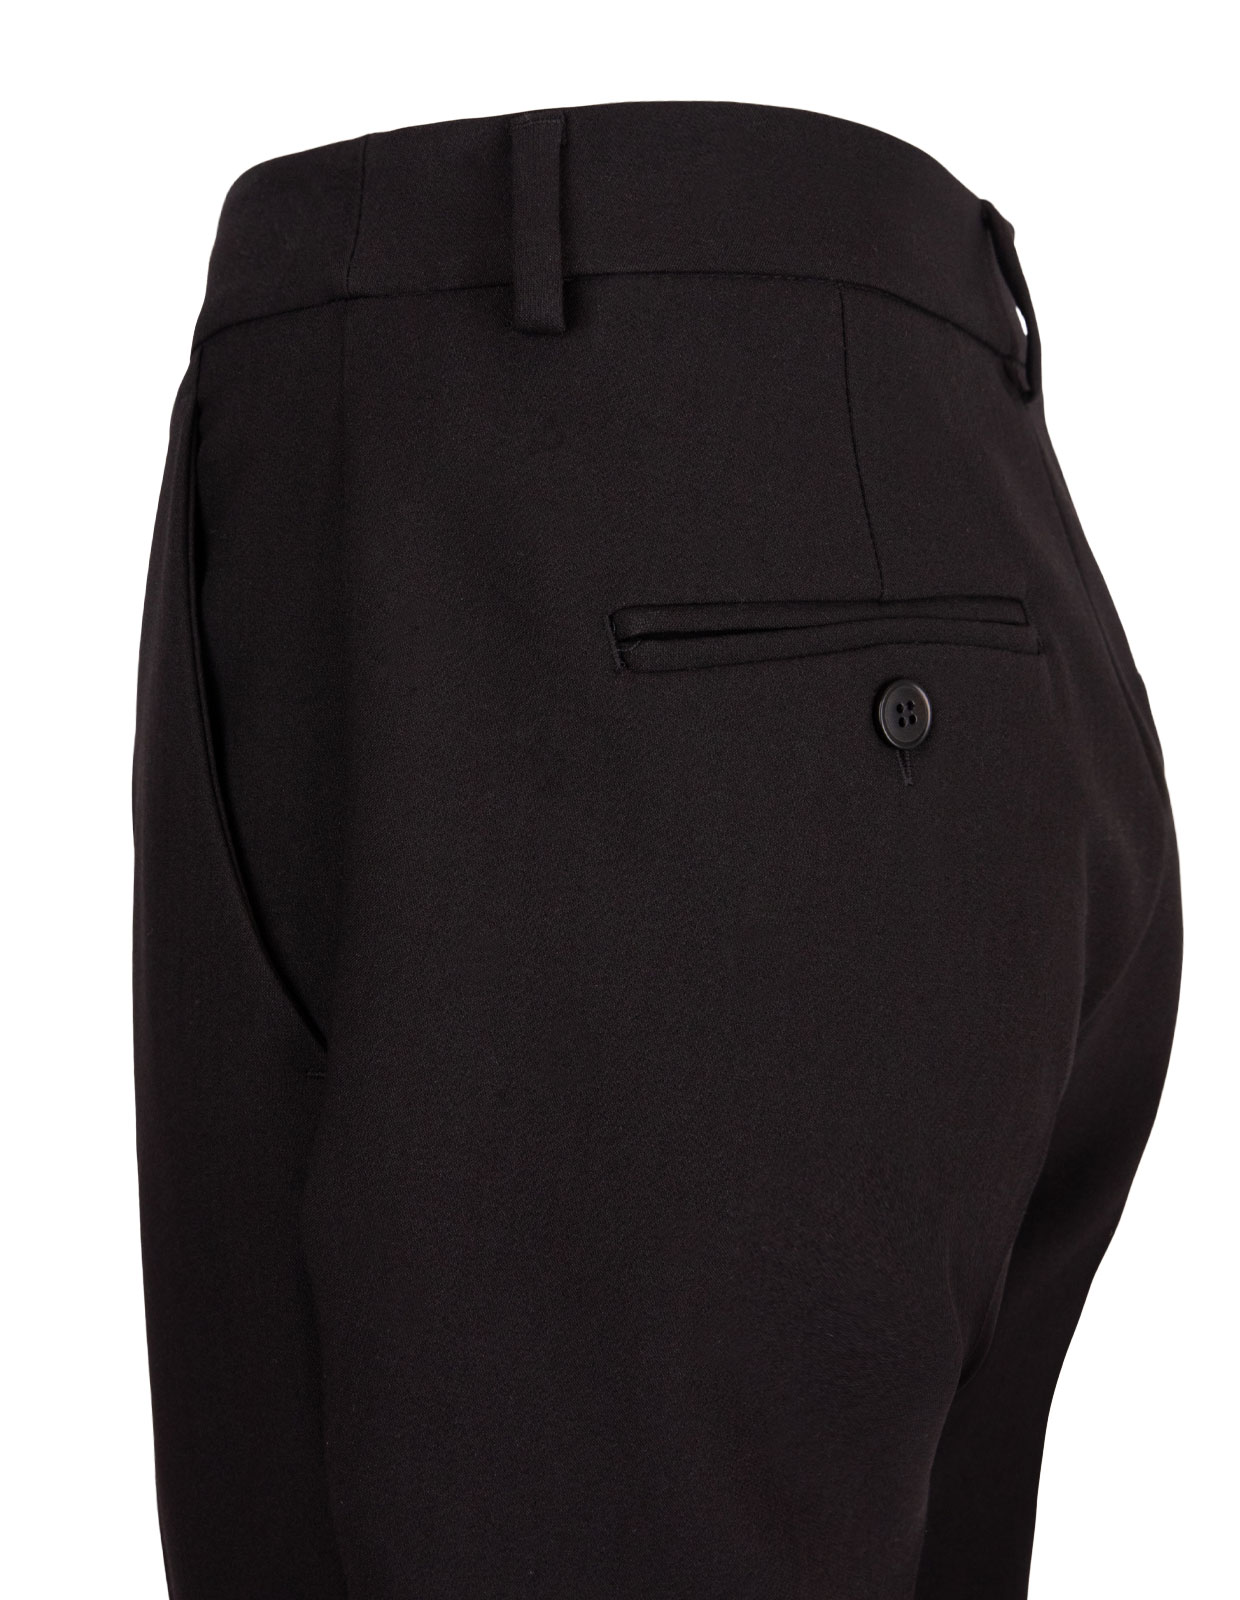 Patata Trousers Black Stl 36